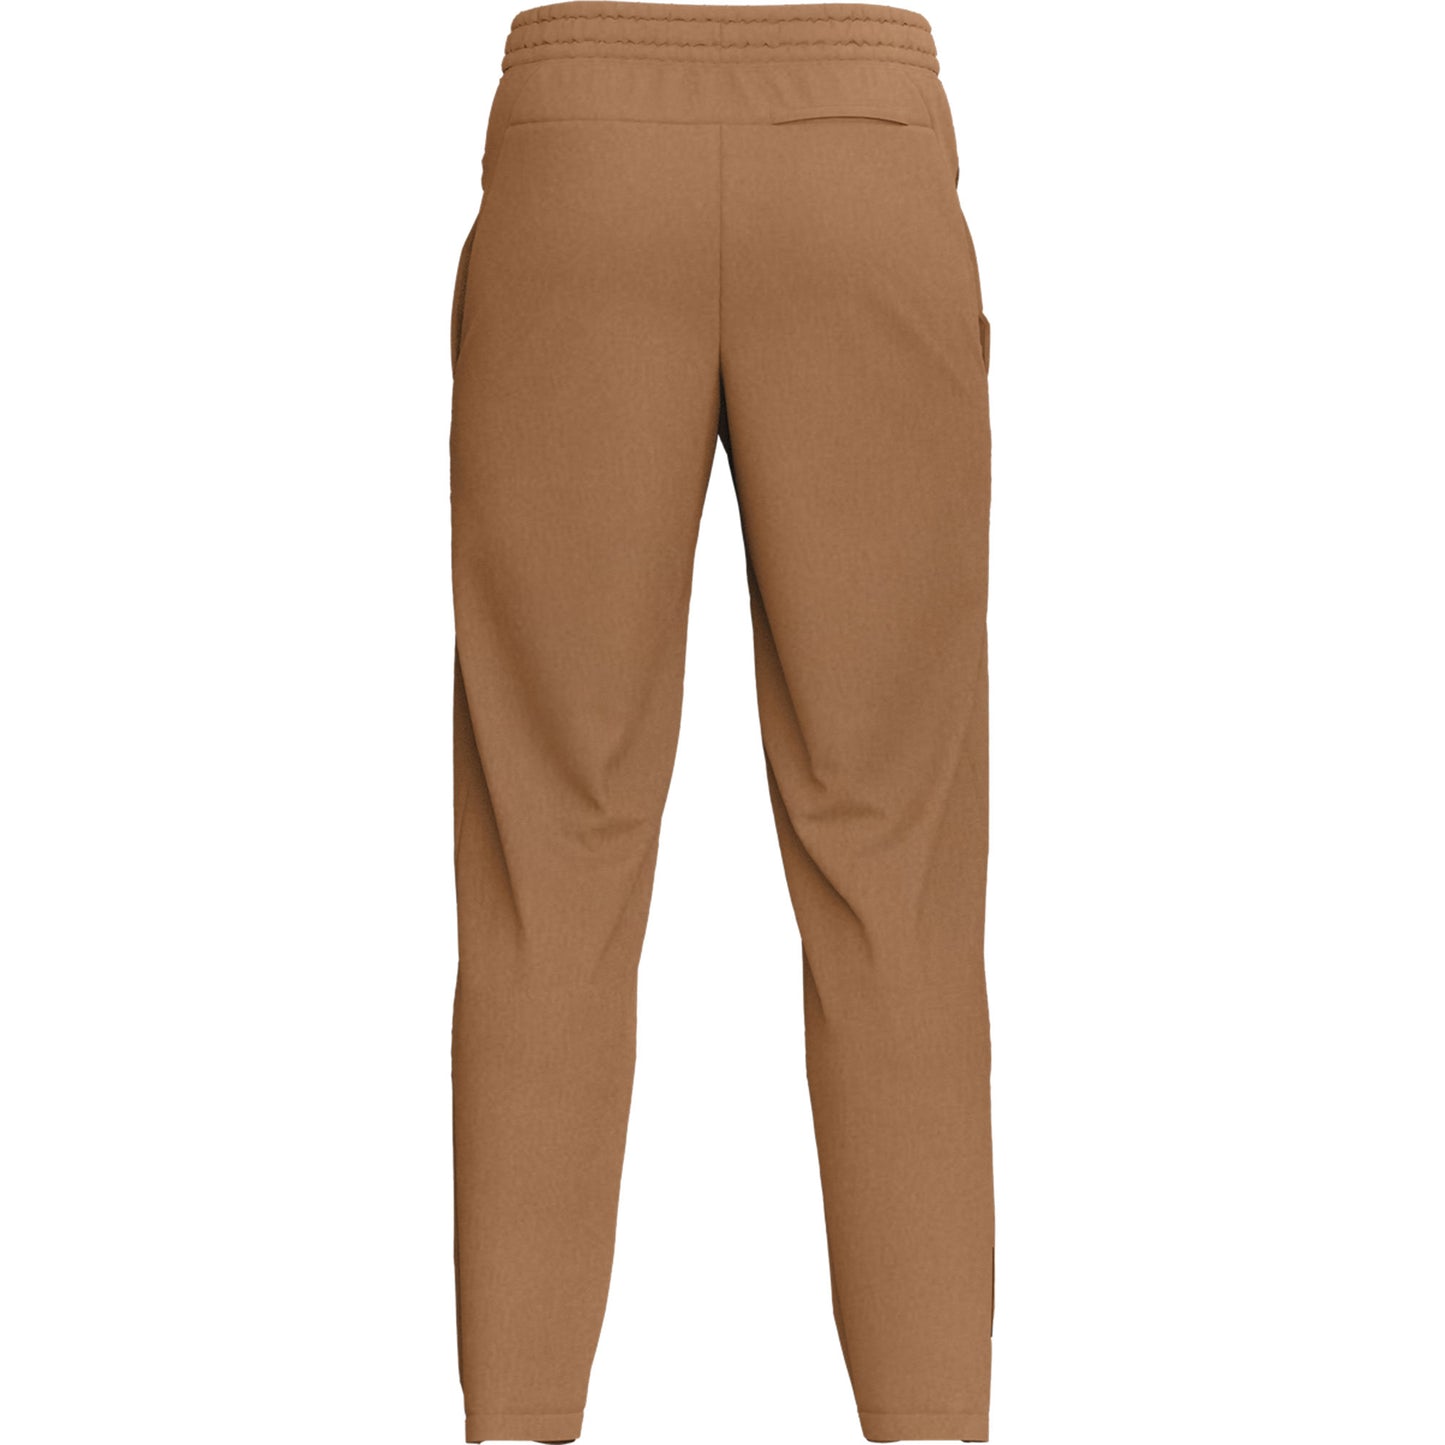 Men's Brown Cotton Fleece Thermal Sweatpants